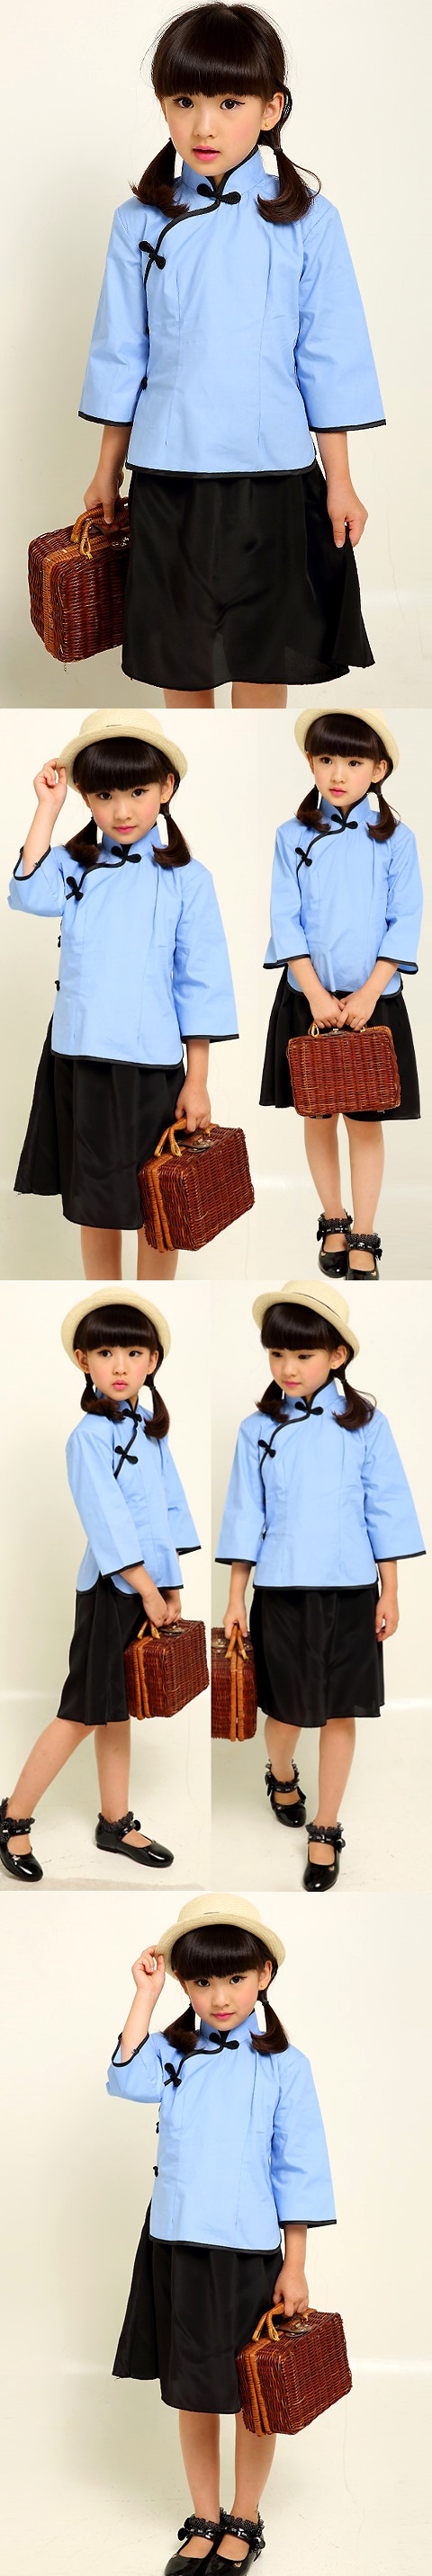 School-girl Uniform in Republic of China Period (RM)